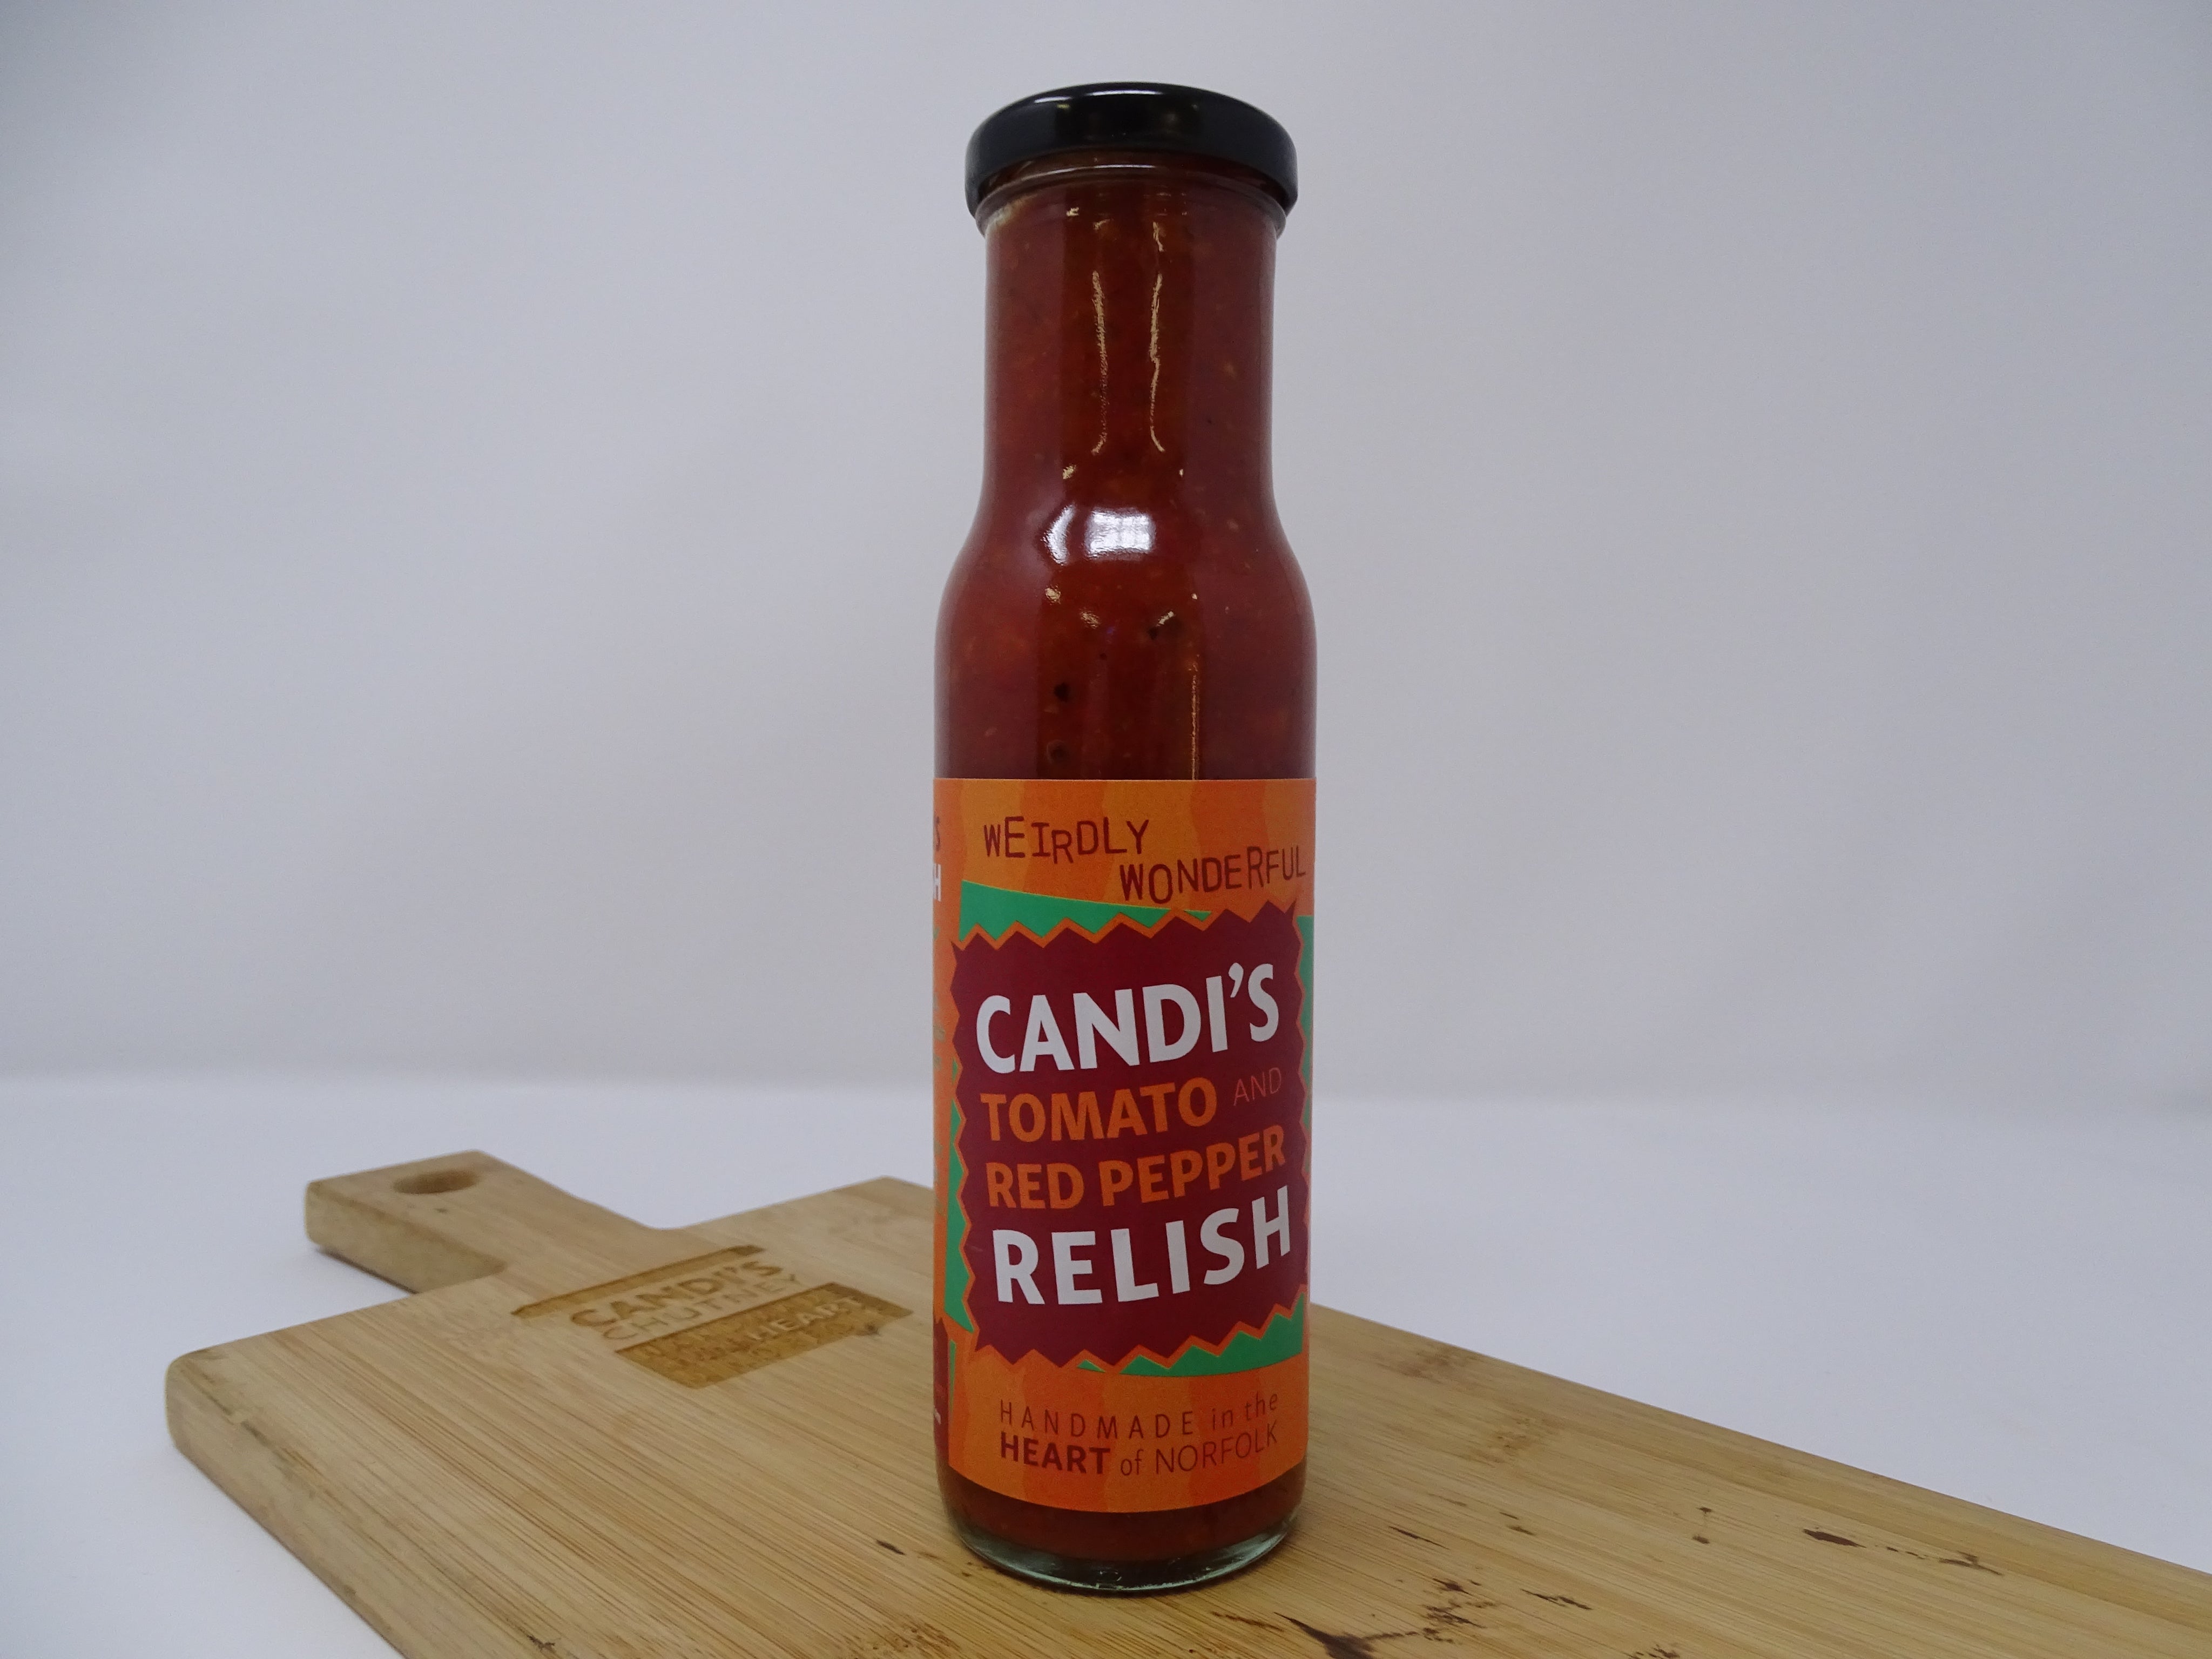 Candi's Relish Gift Pack